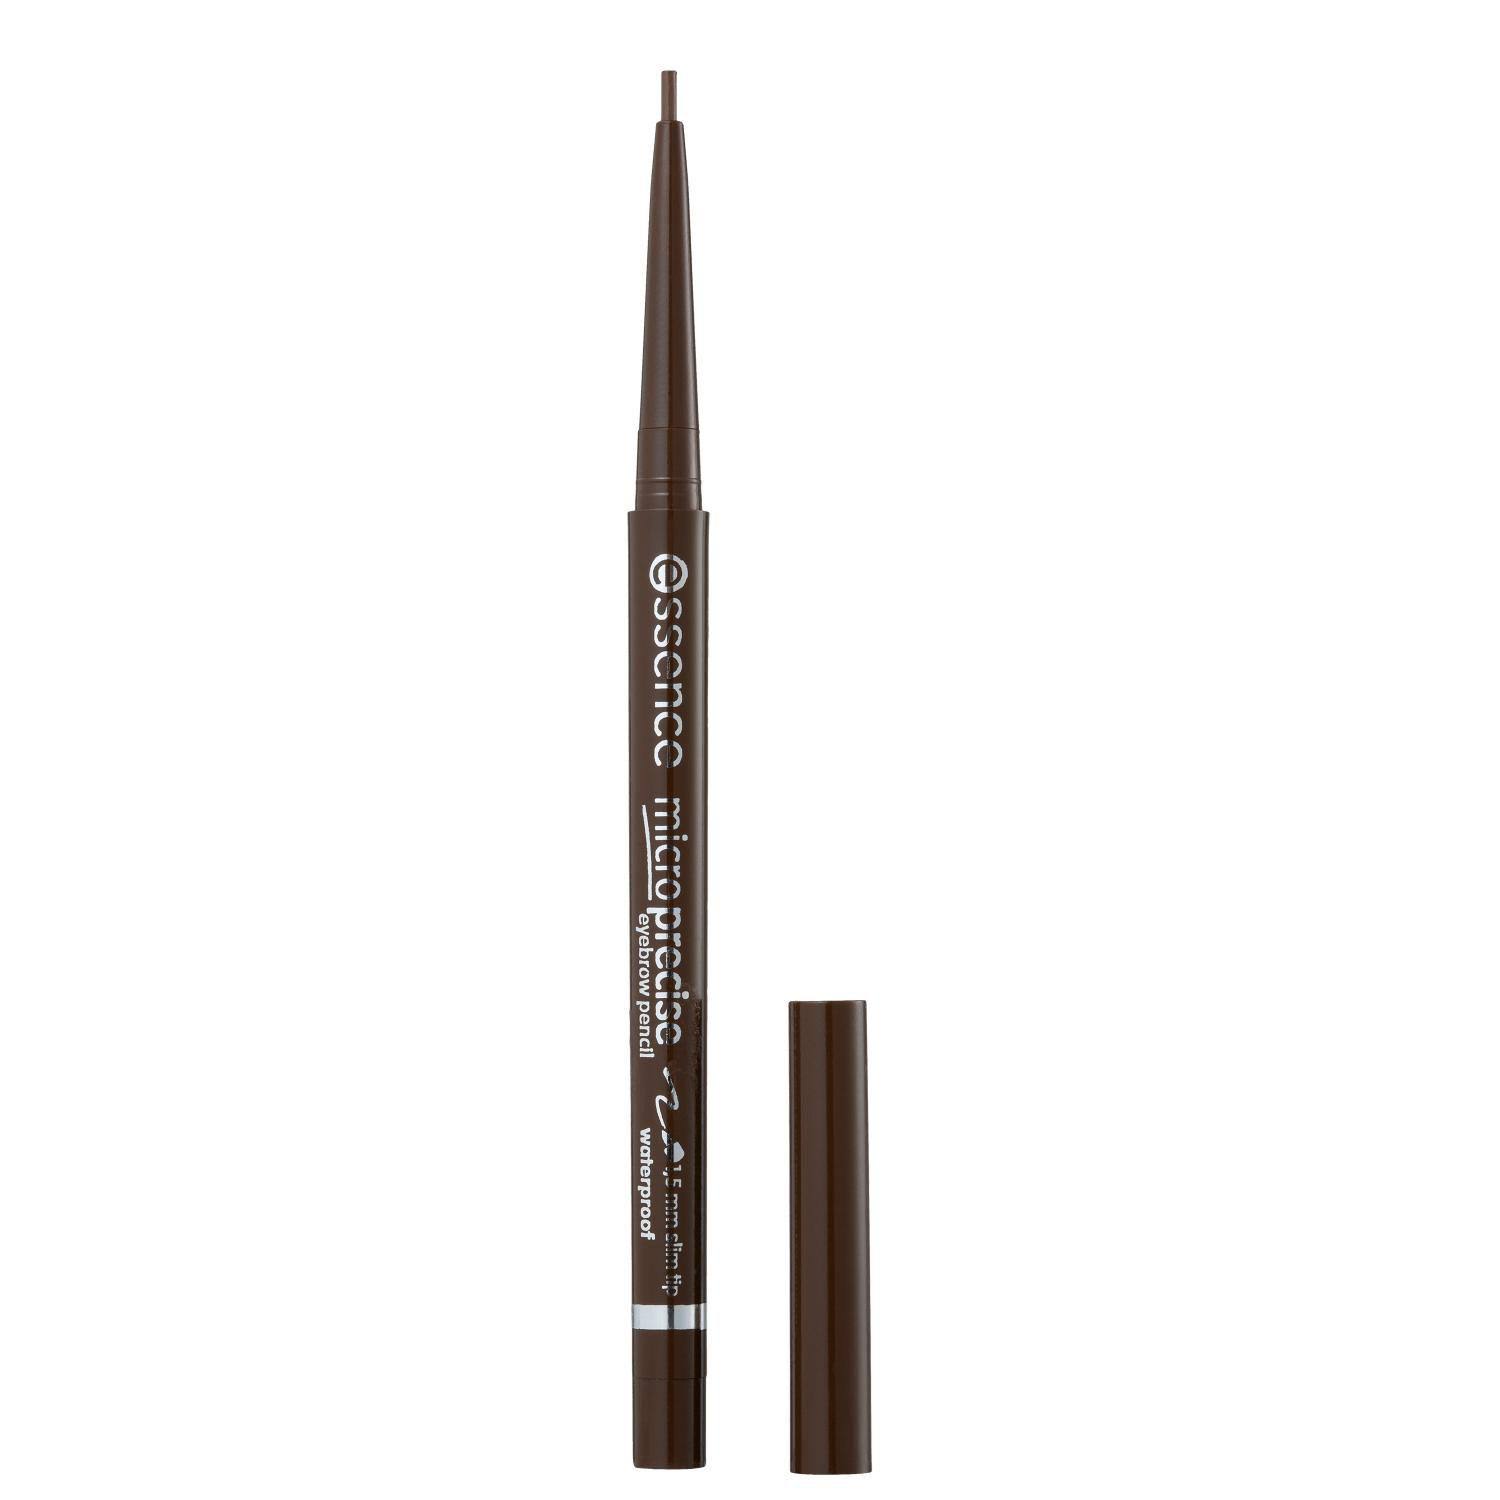 Essence Micro Precise Eyebrow Pencil 03 Dark Brown